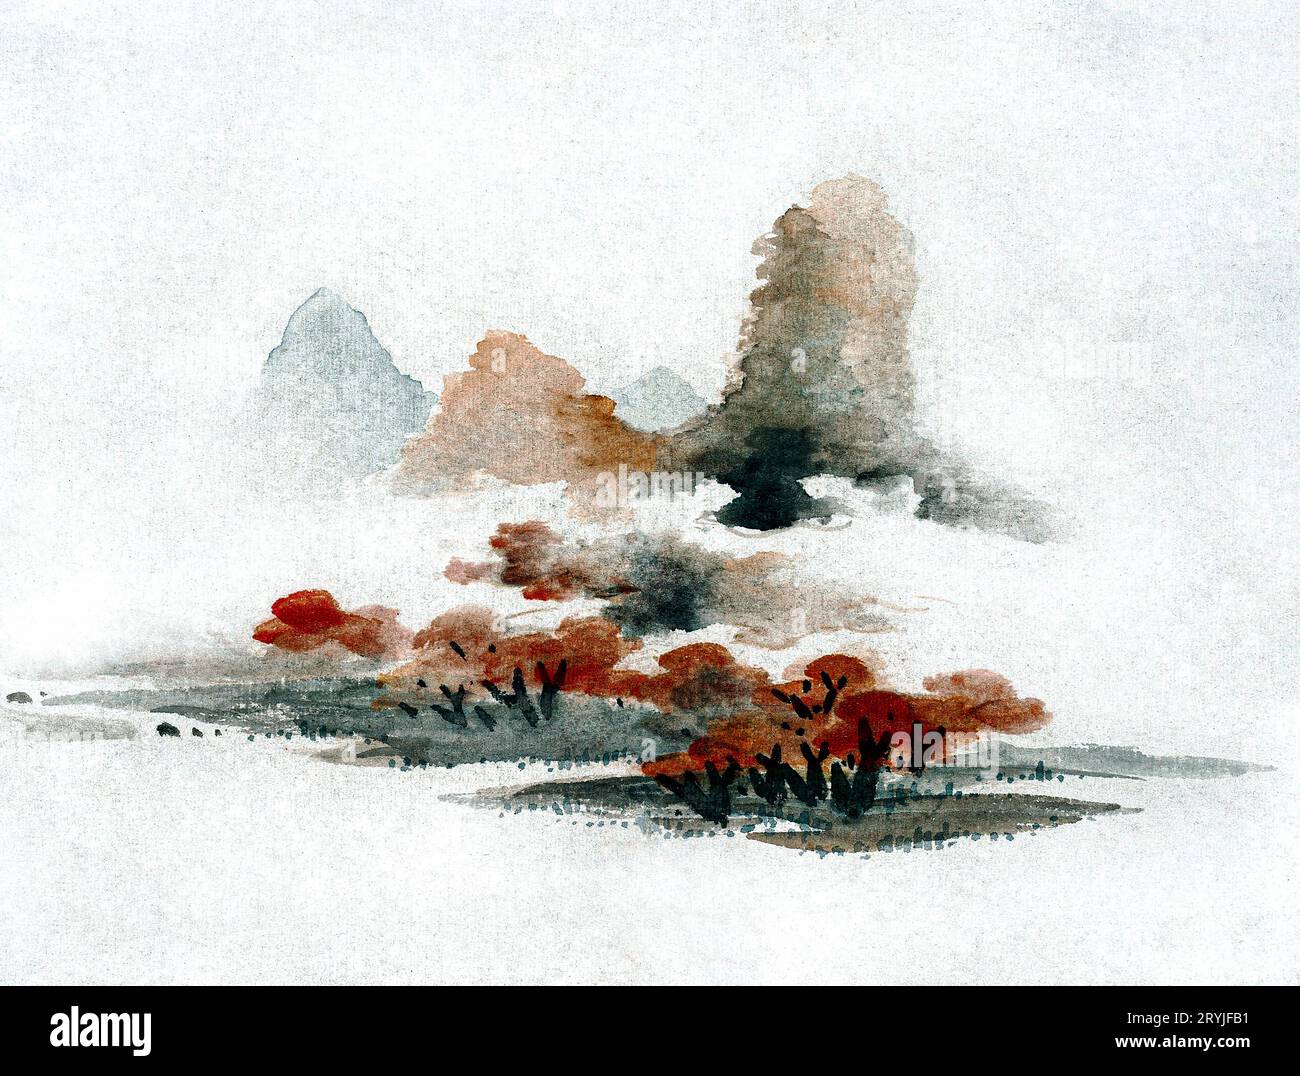 japanese watercolor landscape - Google Search  Landscape paintings,  Chinese landscape painting, Watercolor landscape paintings